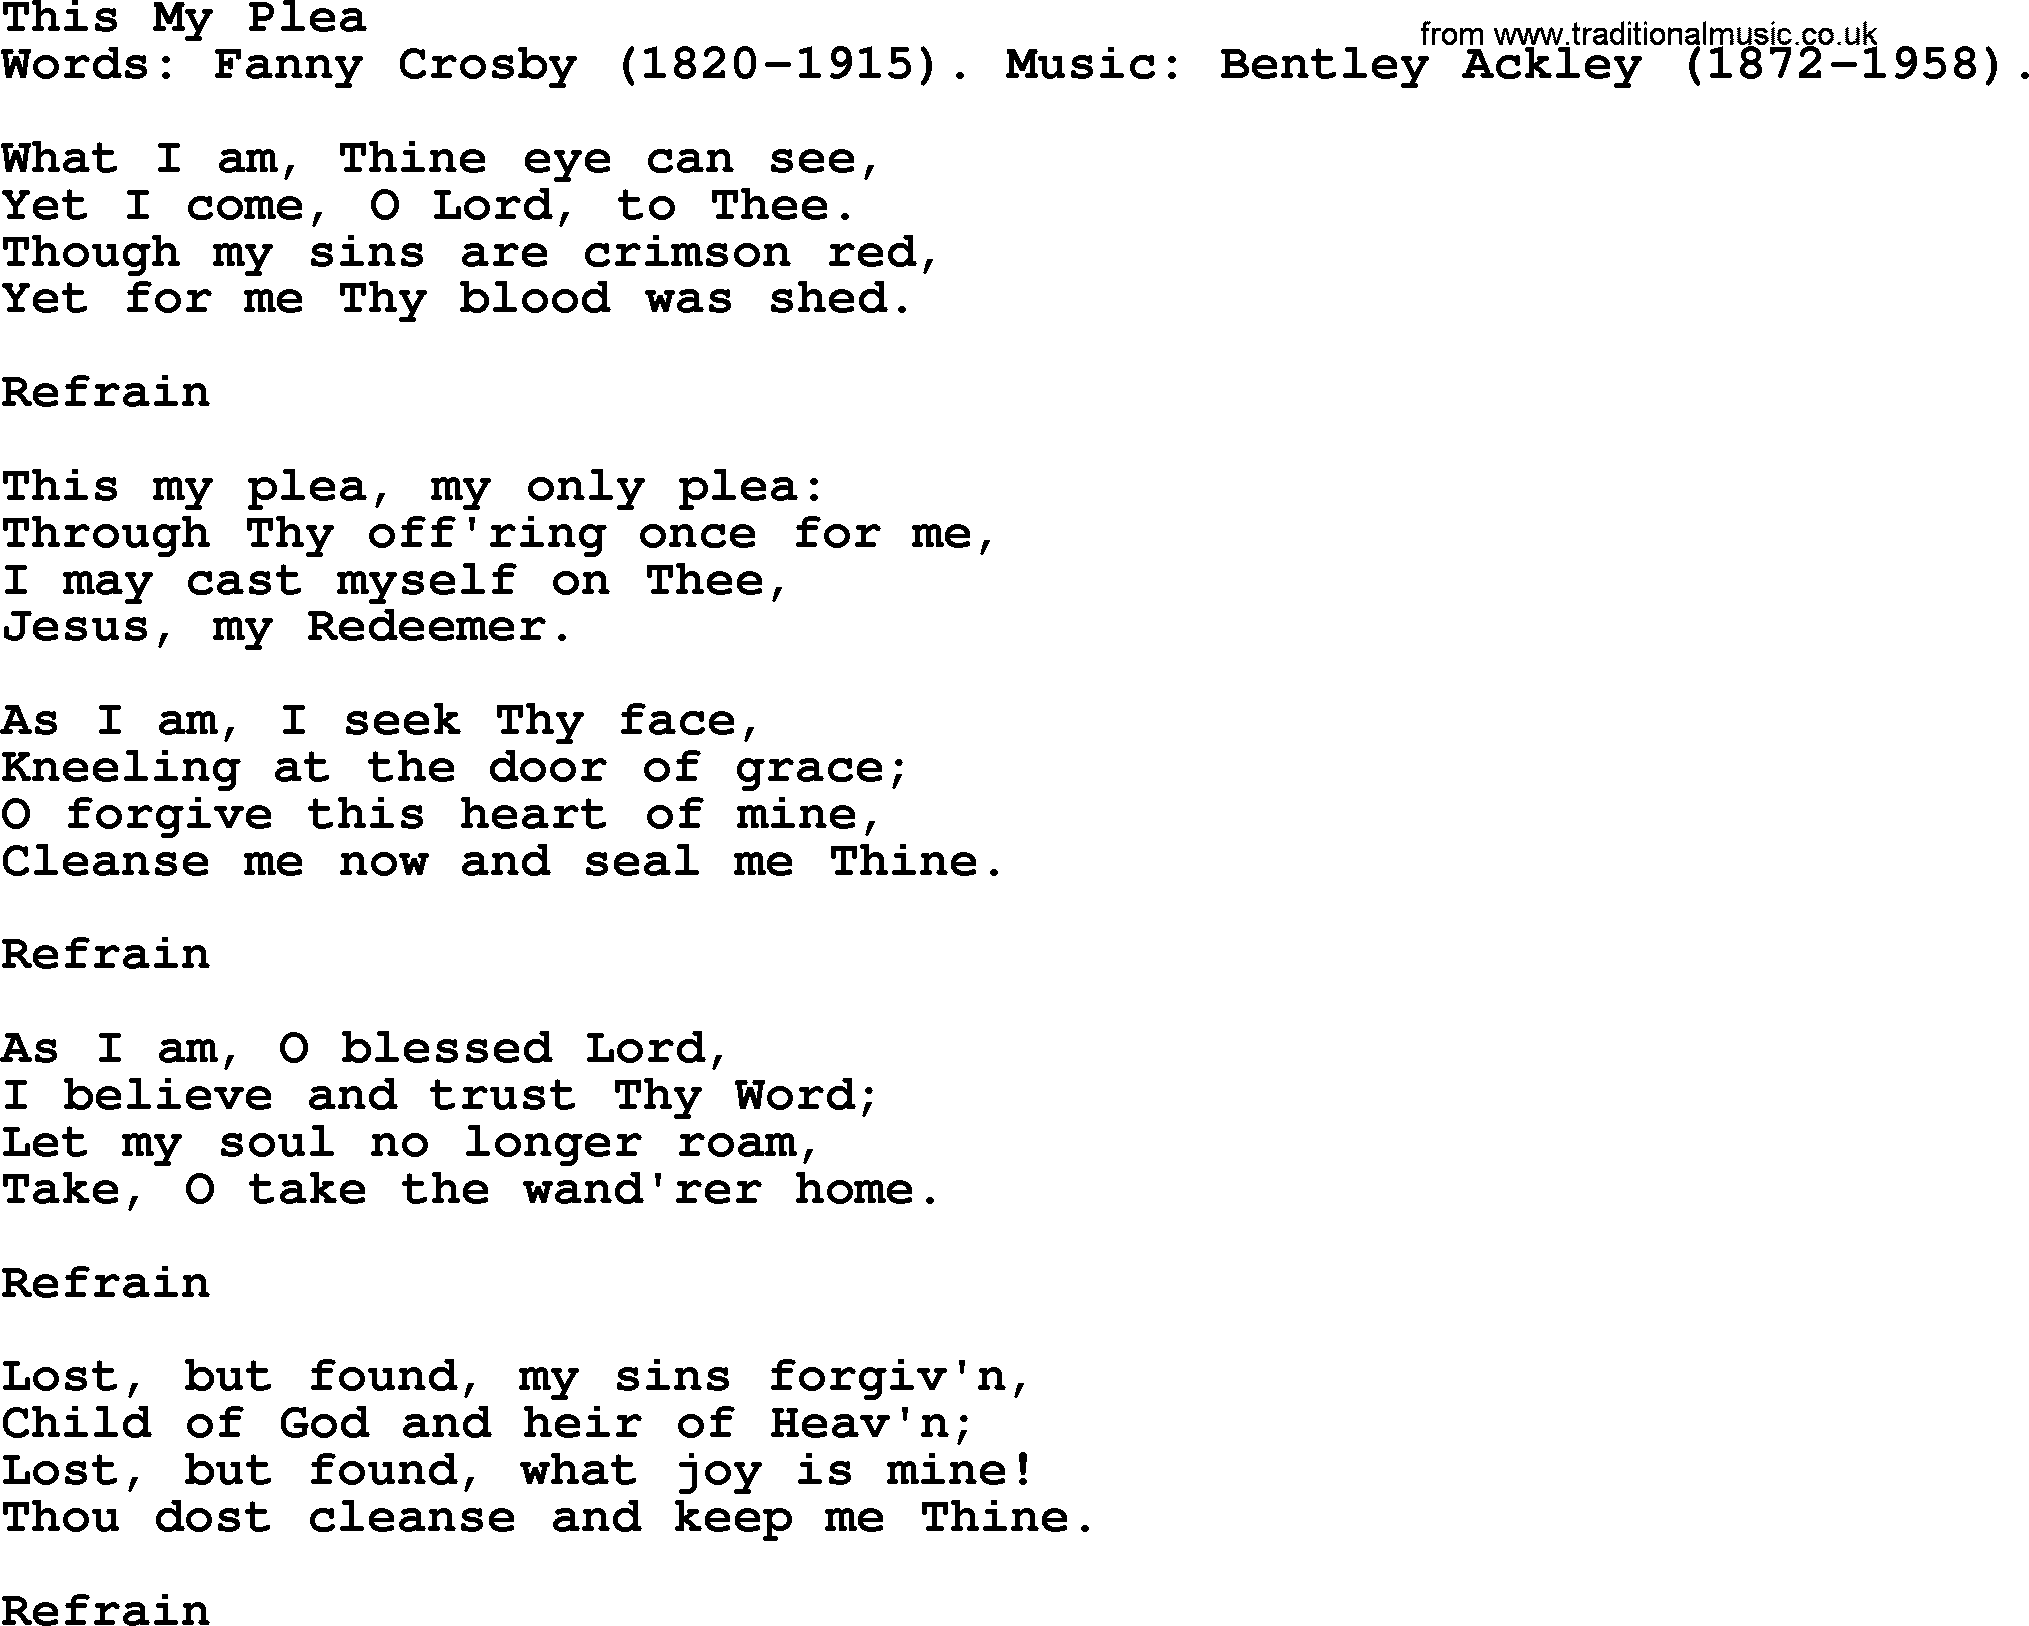 Fanny Crosby song: This My Plea, lyrics